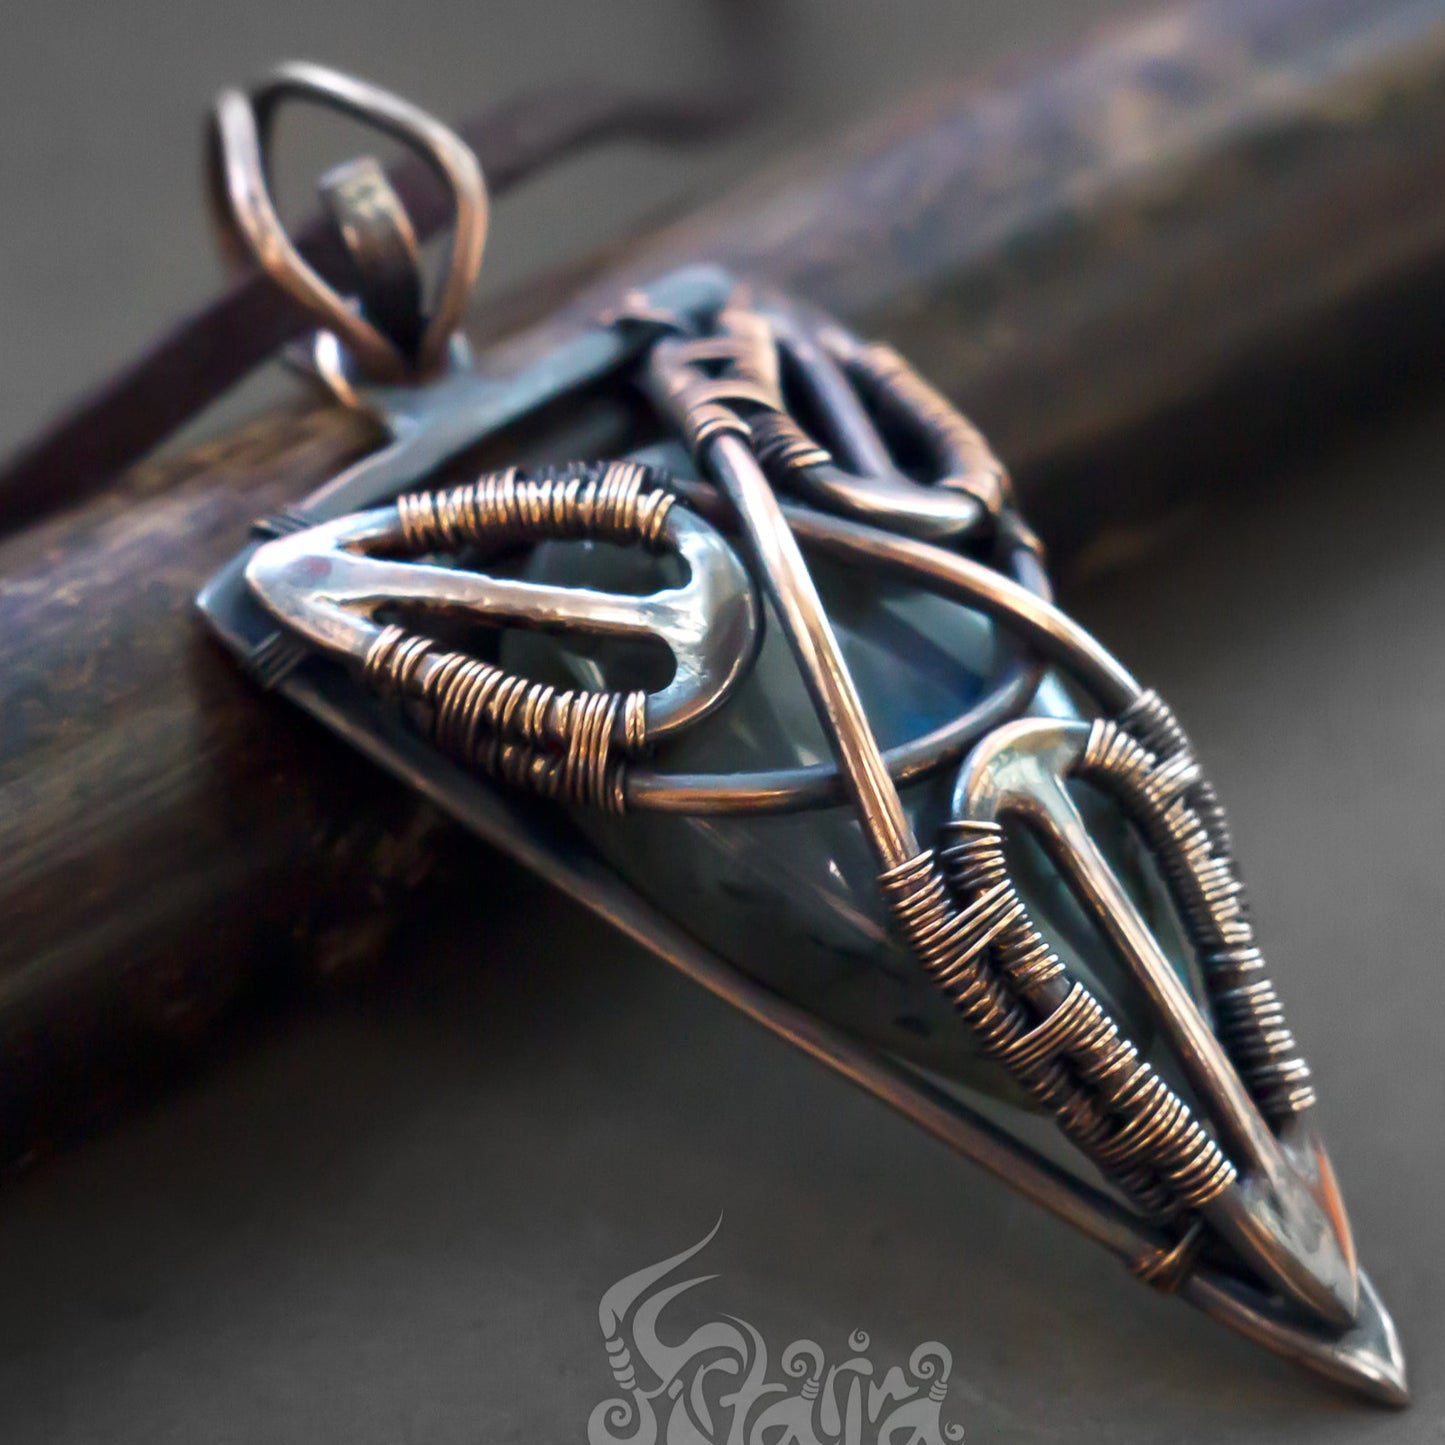 Triangle patina copper wire necklace with labradorite stone pic 1